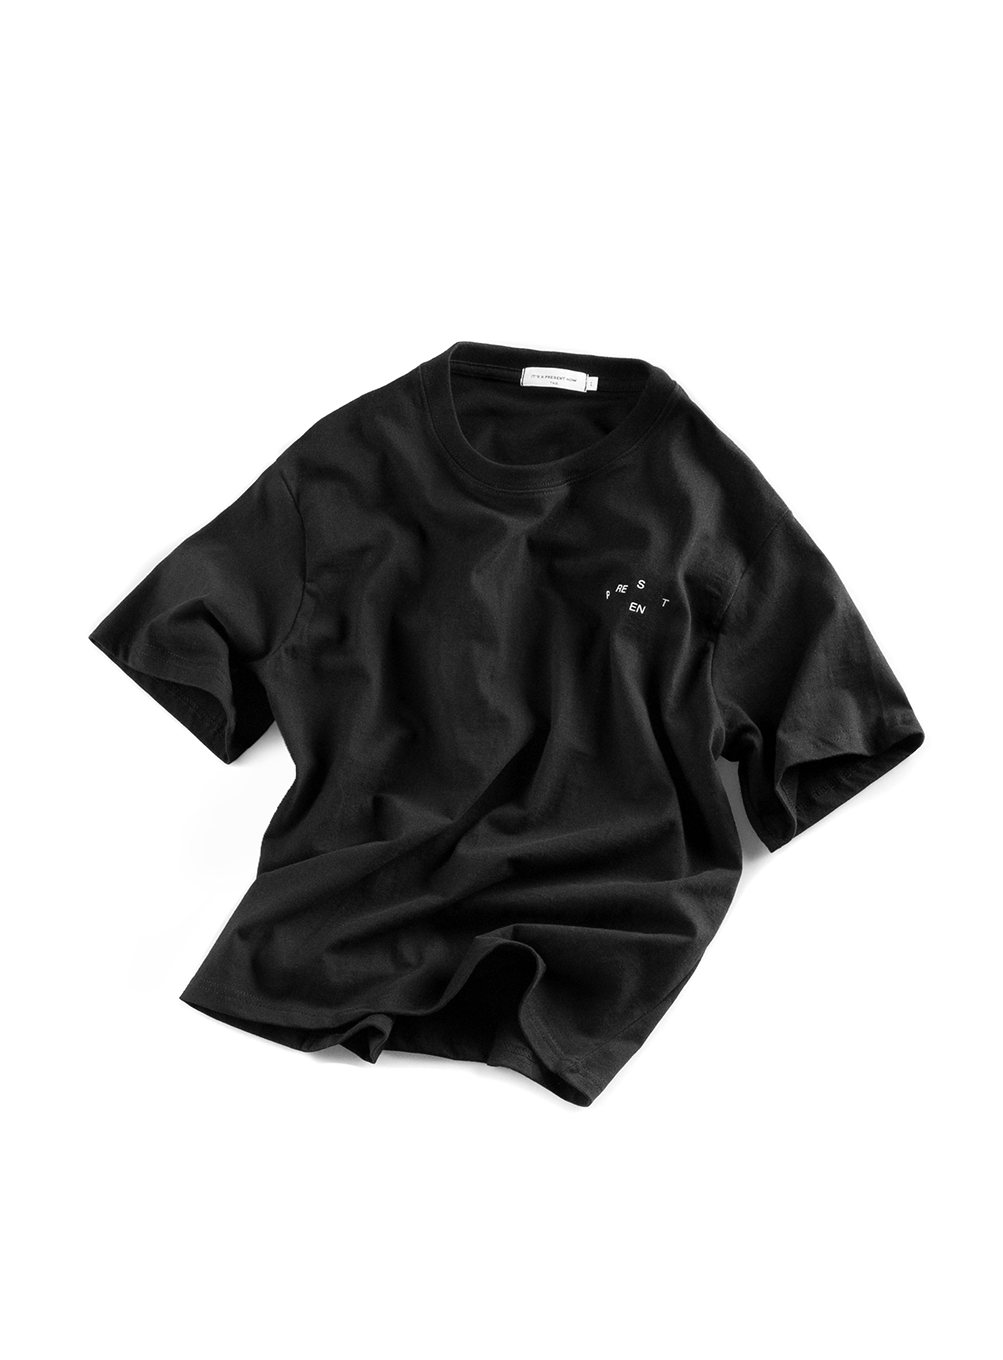 [60% SALE] Present t-shirt black